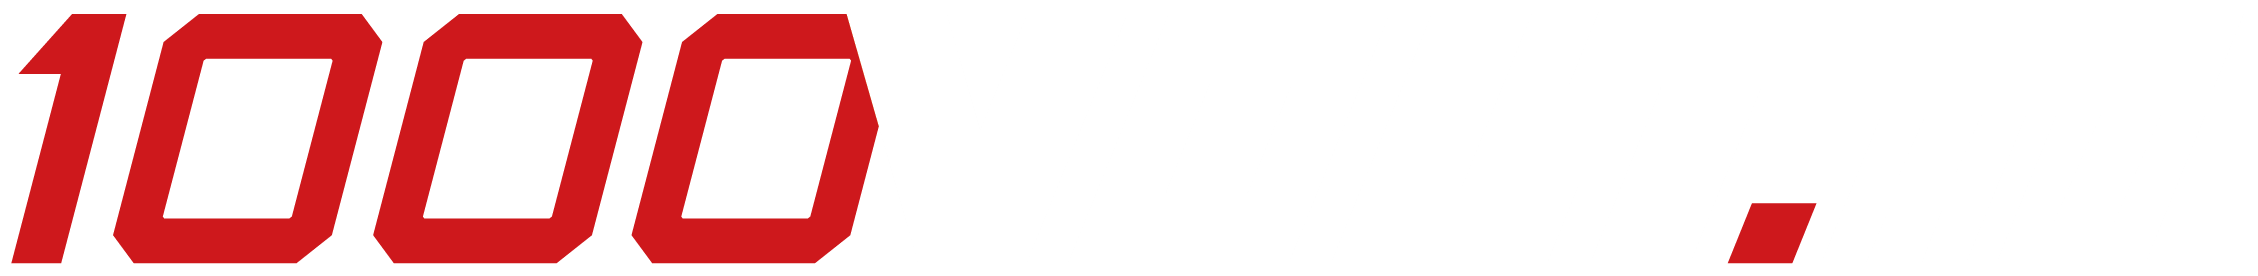 1000volt.hu_logo